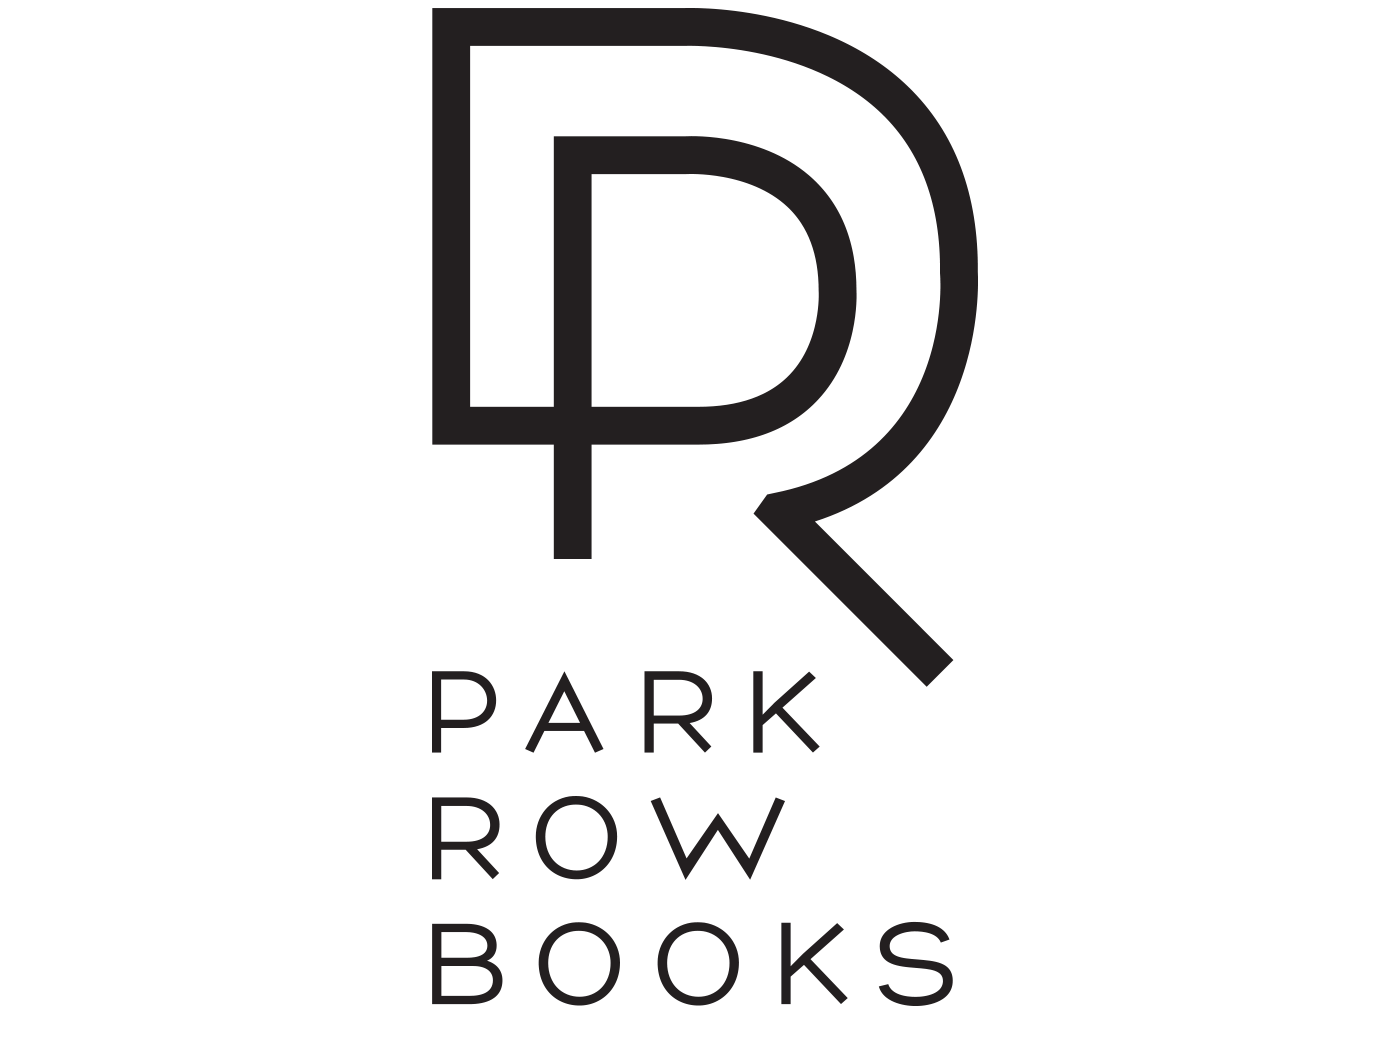 Park Row Books